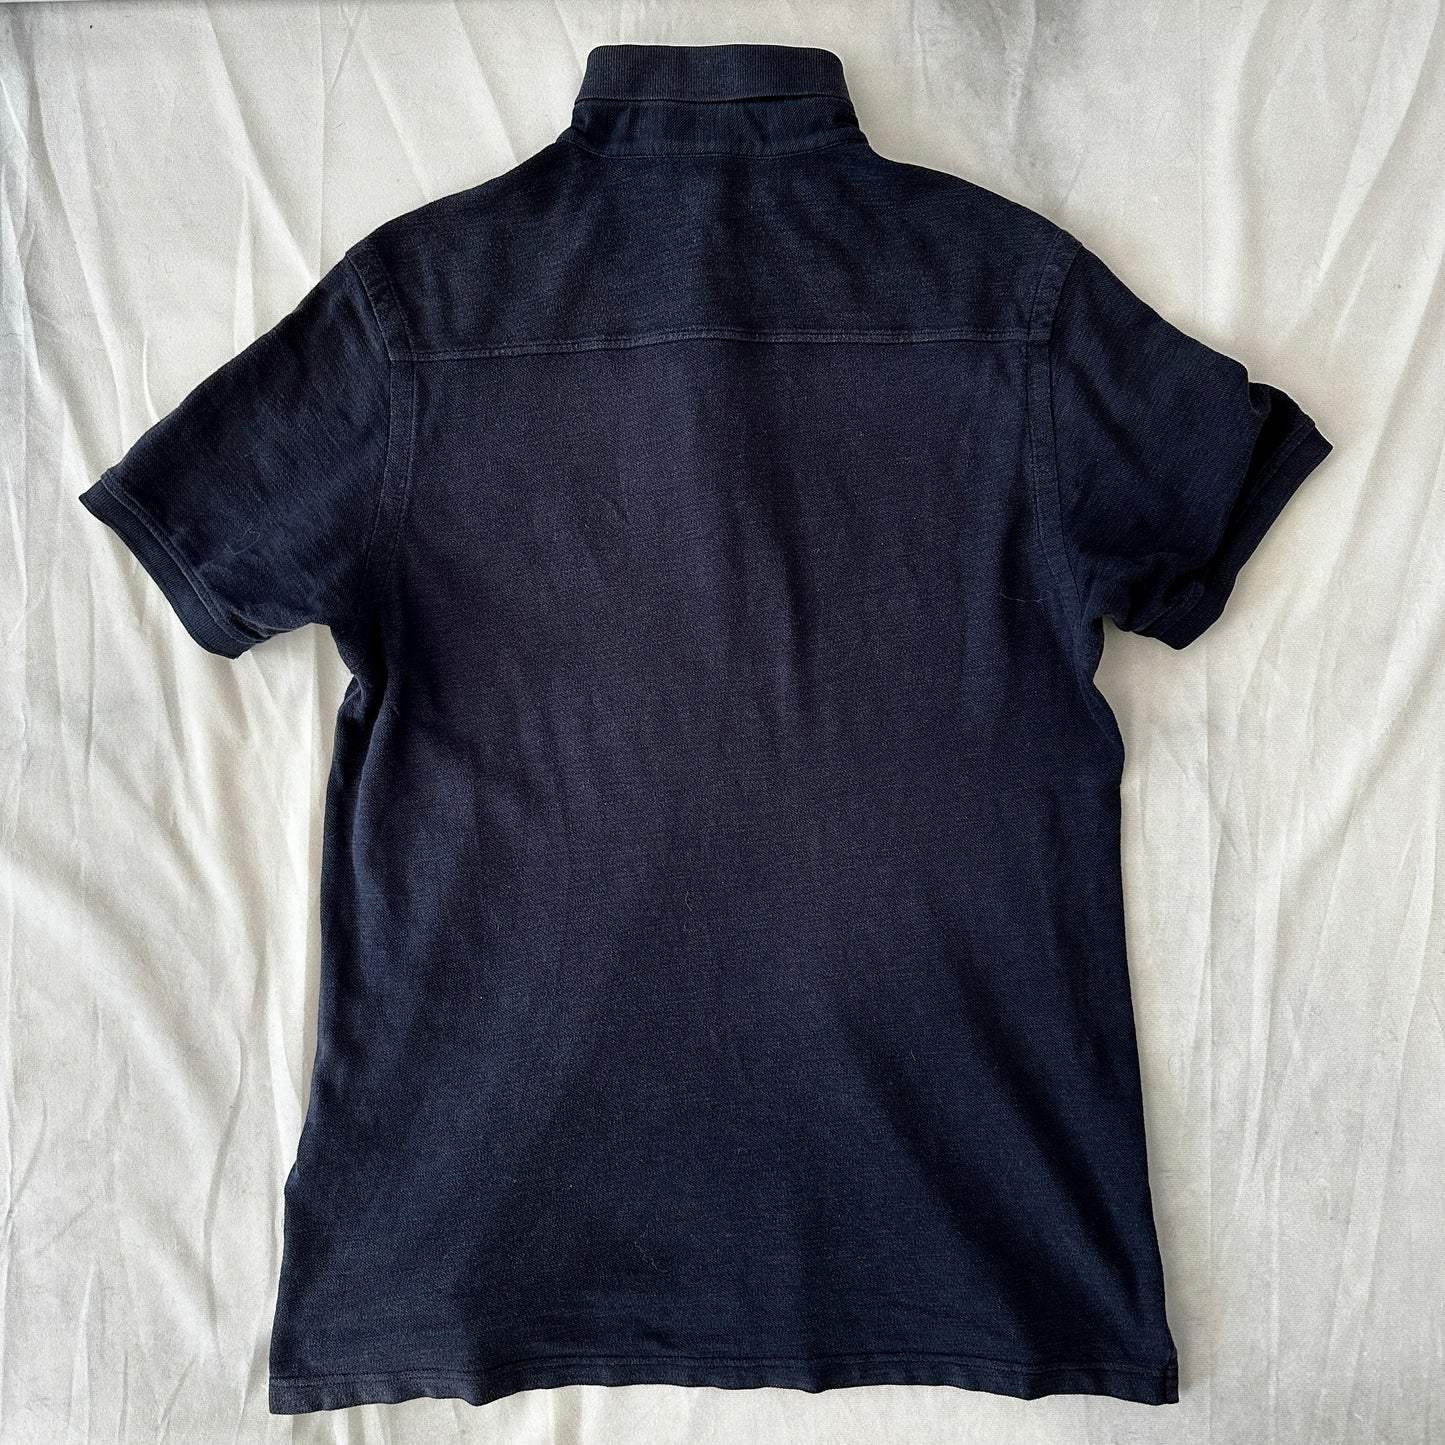 Stone Island Fissato Dye Treatment Polo Shirt 2017 - XL